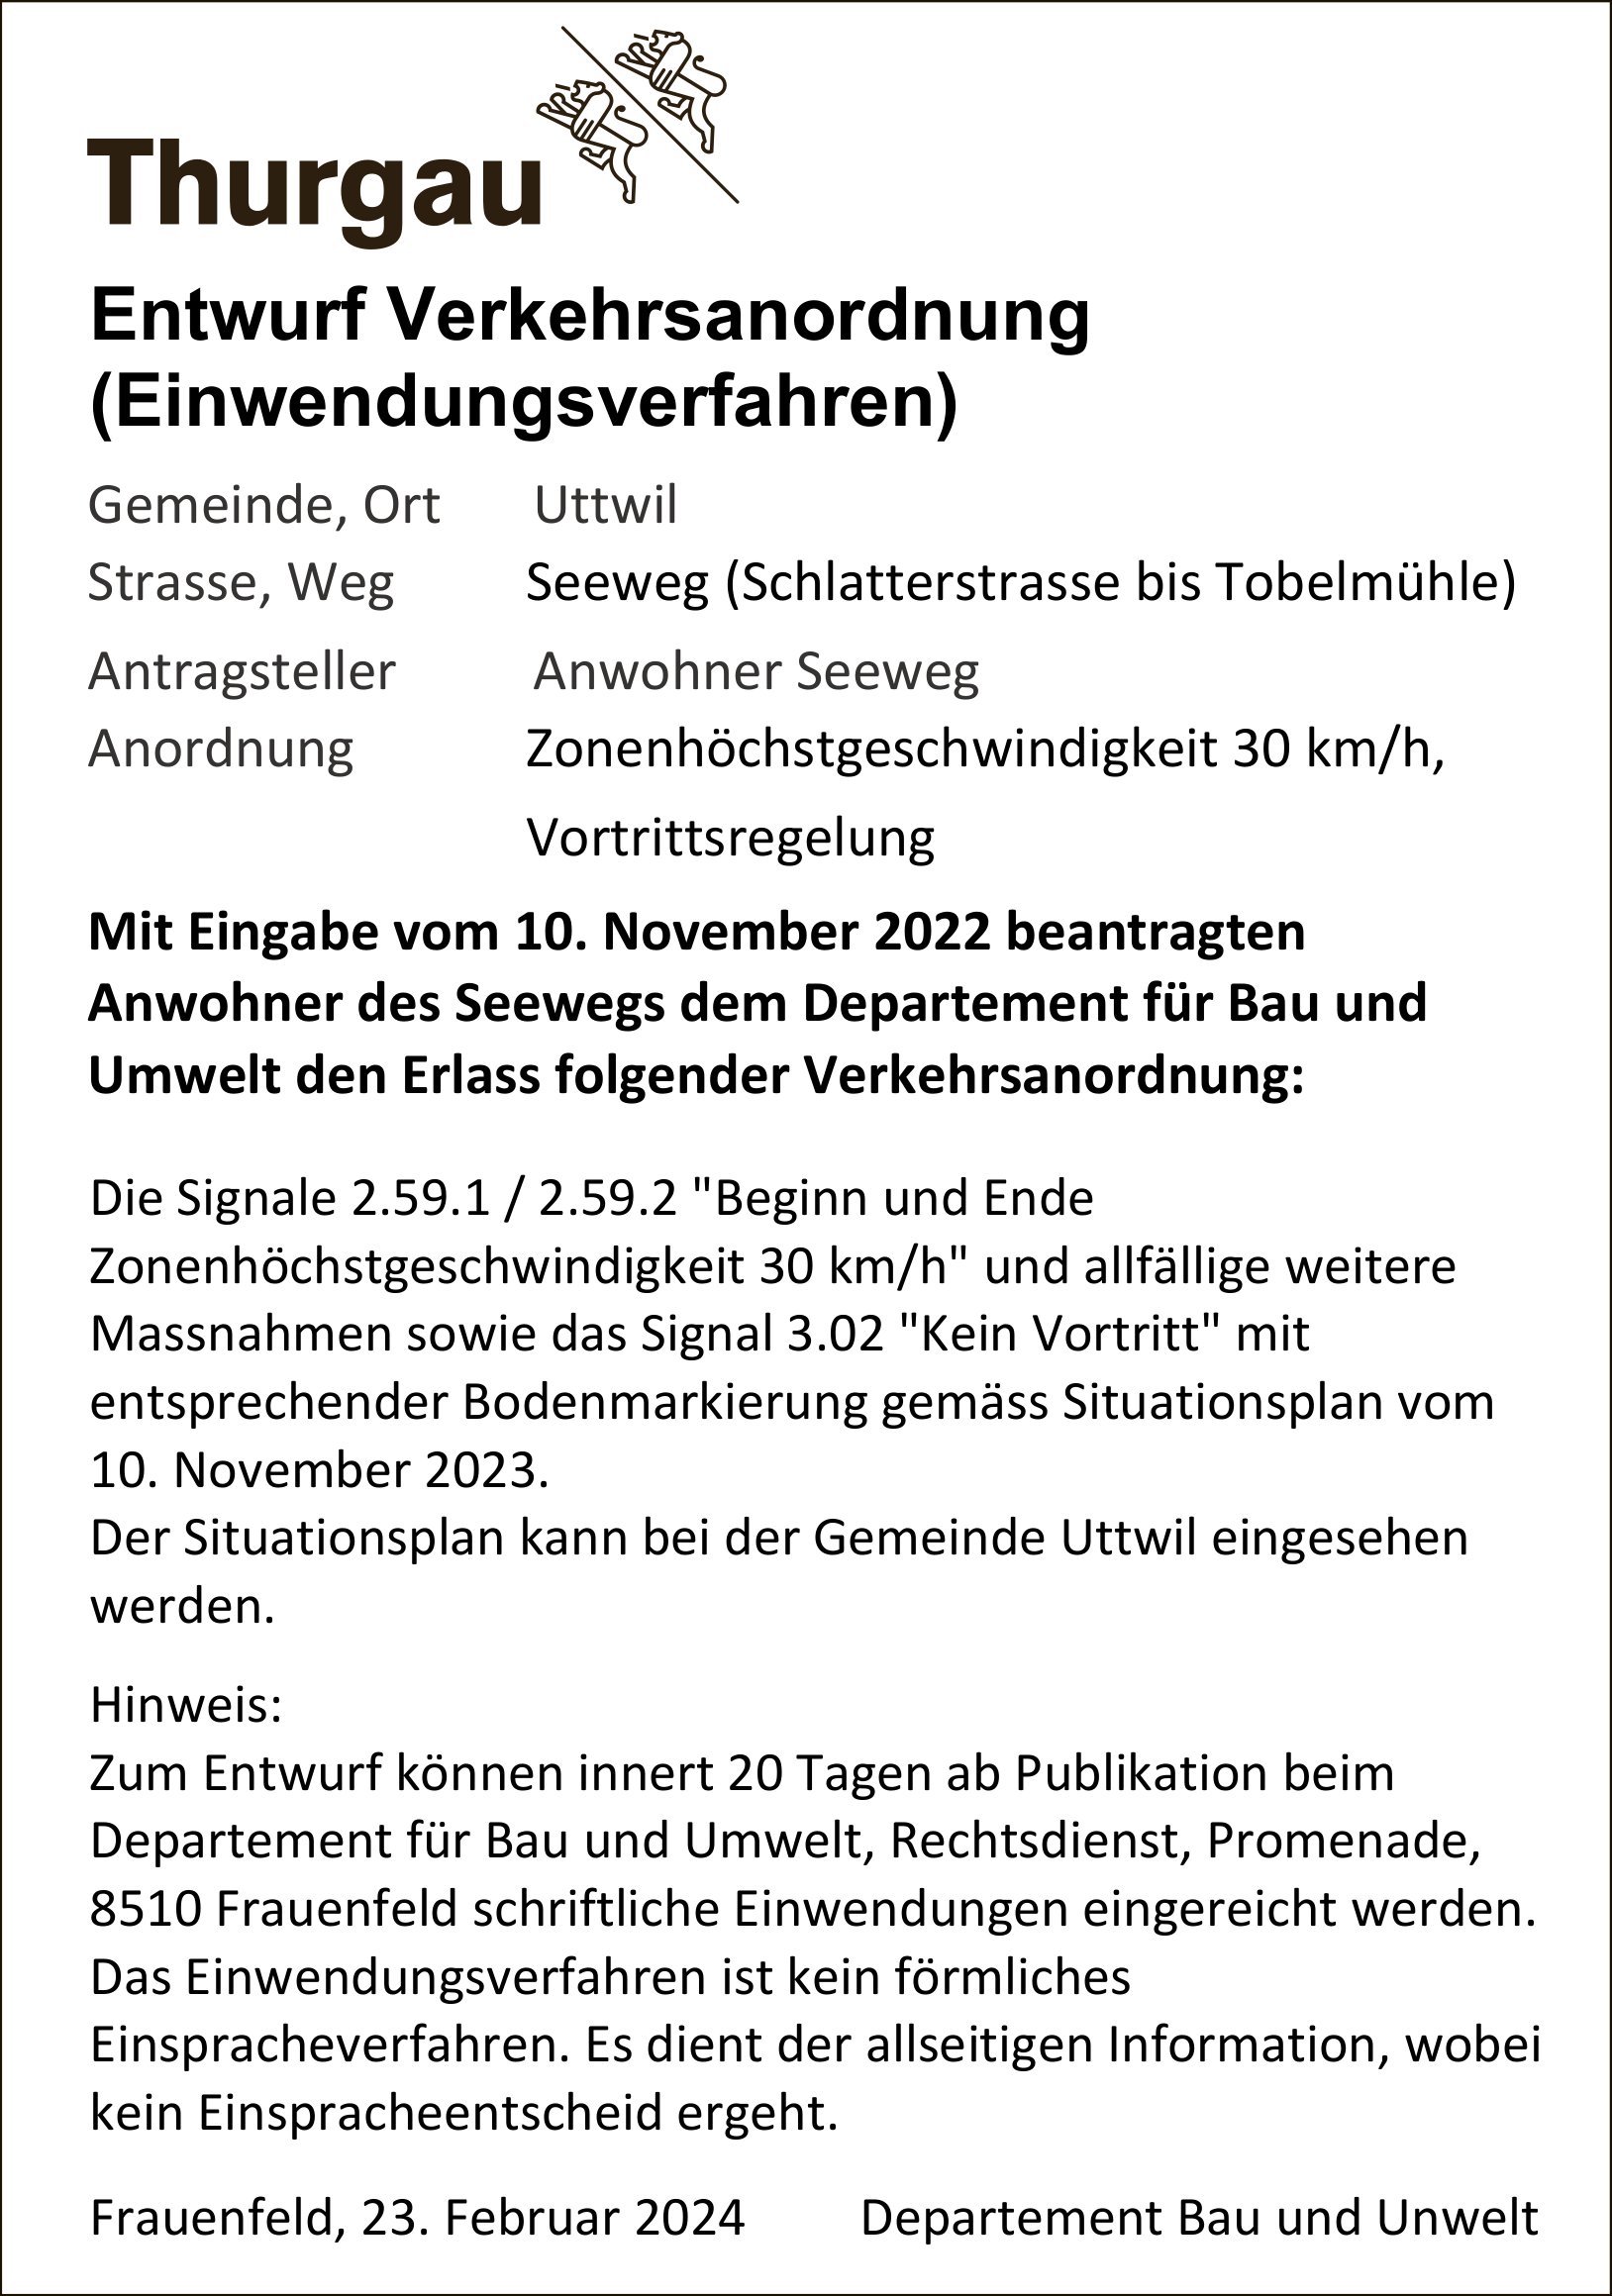 Frauenfeld - Thurgau, Entwurf Verkehrsanordnung